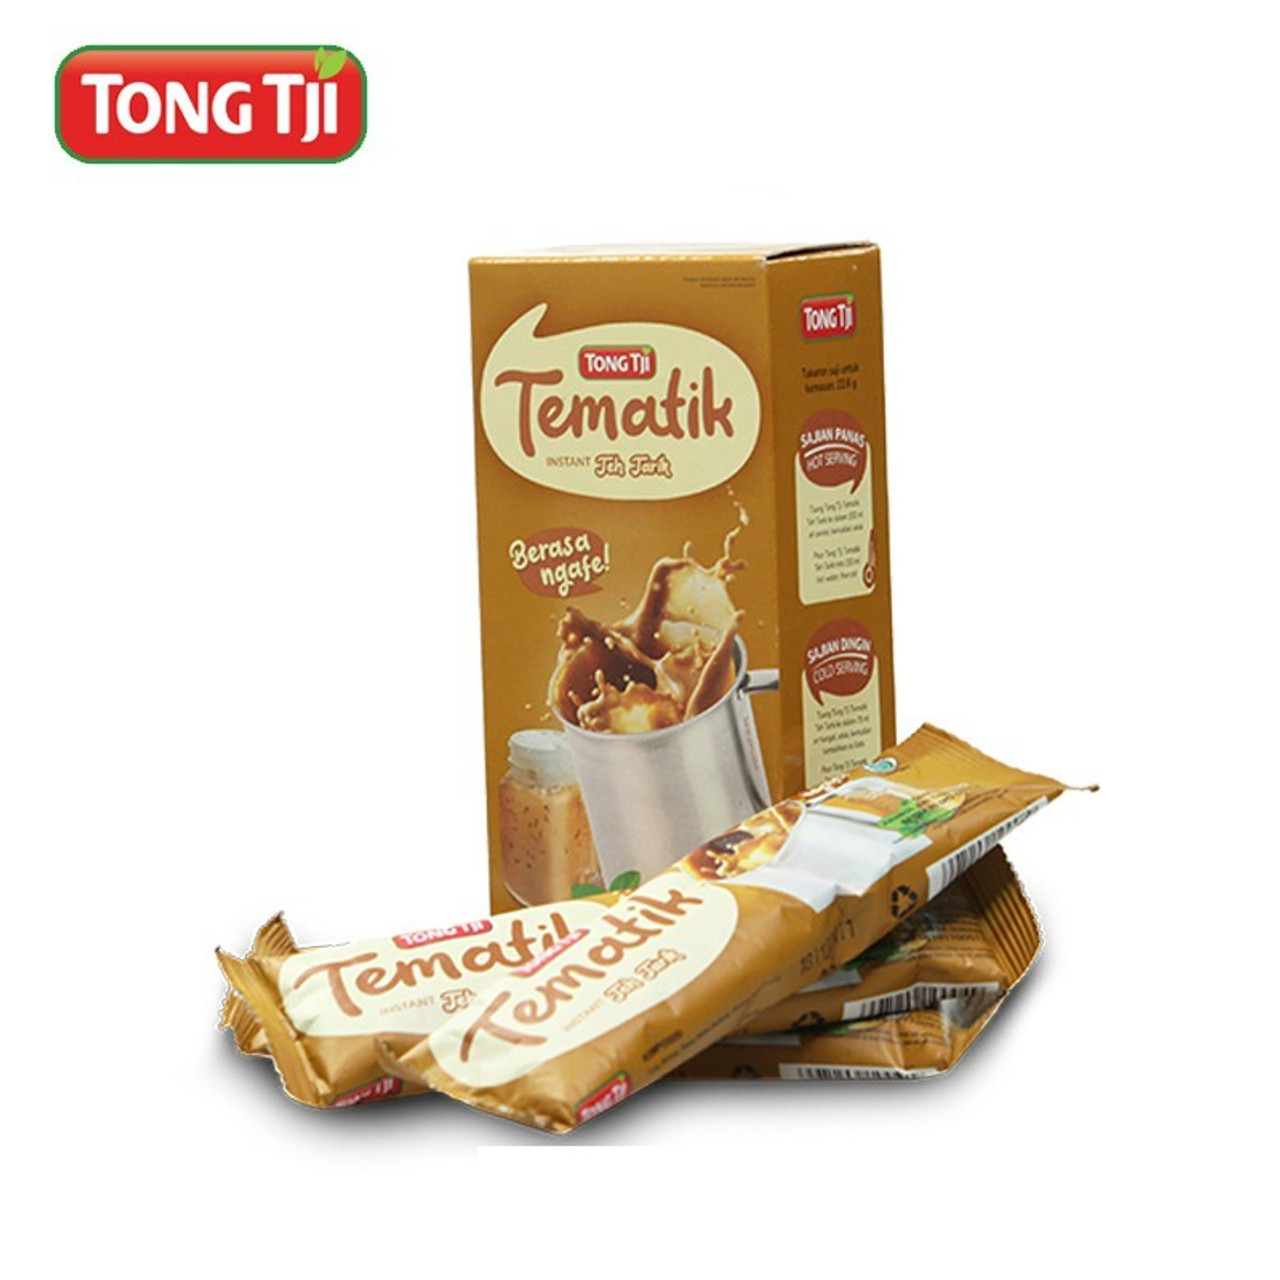 Tong Tji Tematik Instant Teh Tarik 3 sachets